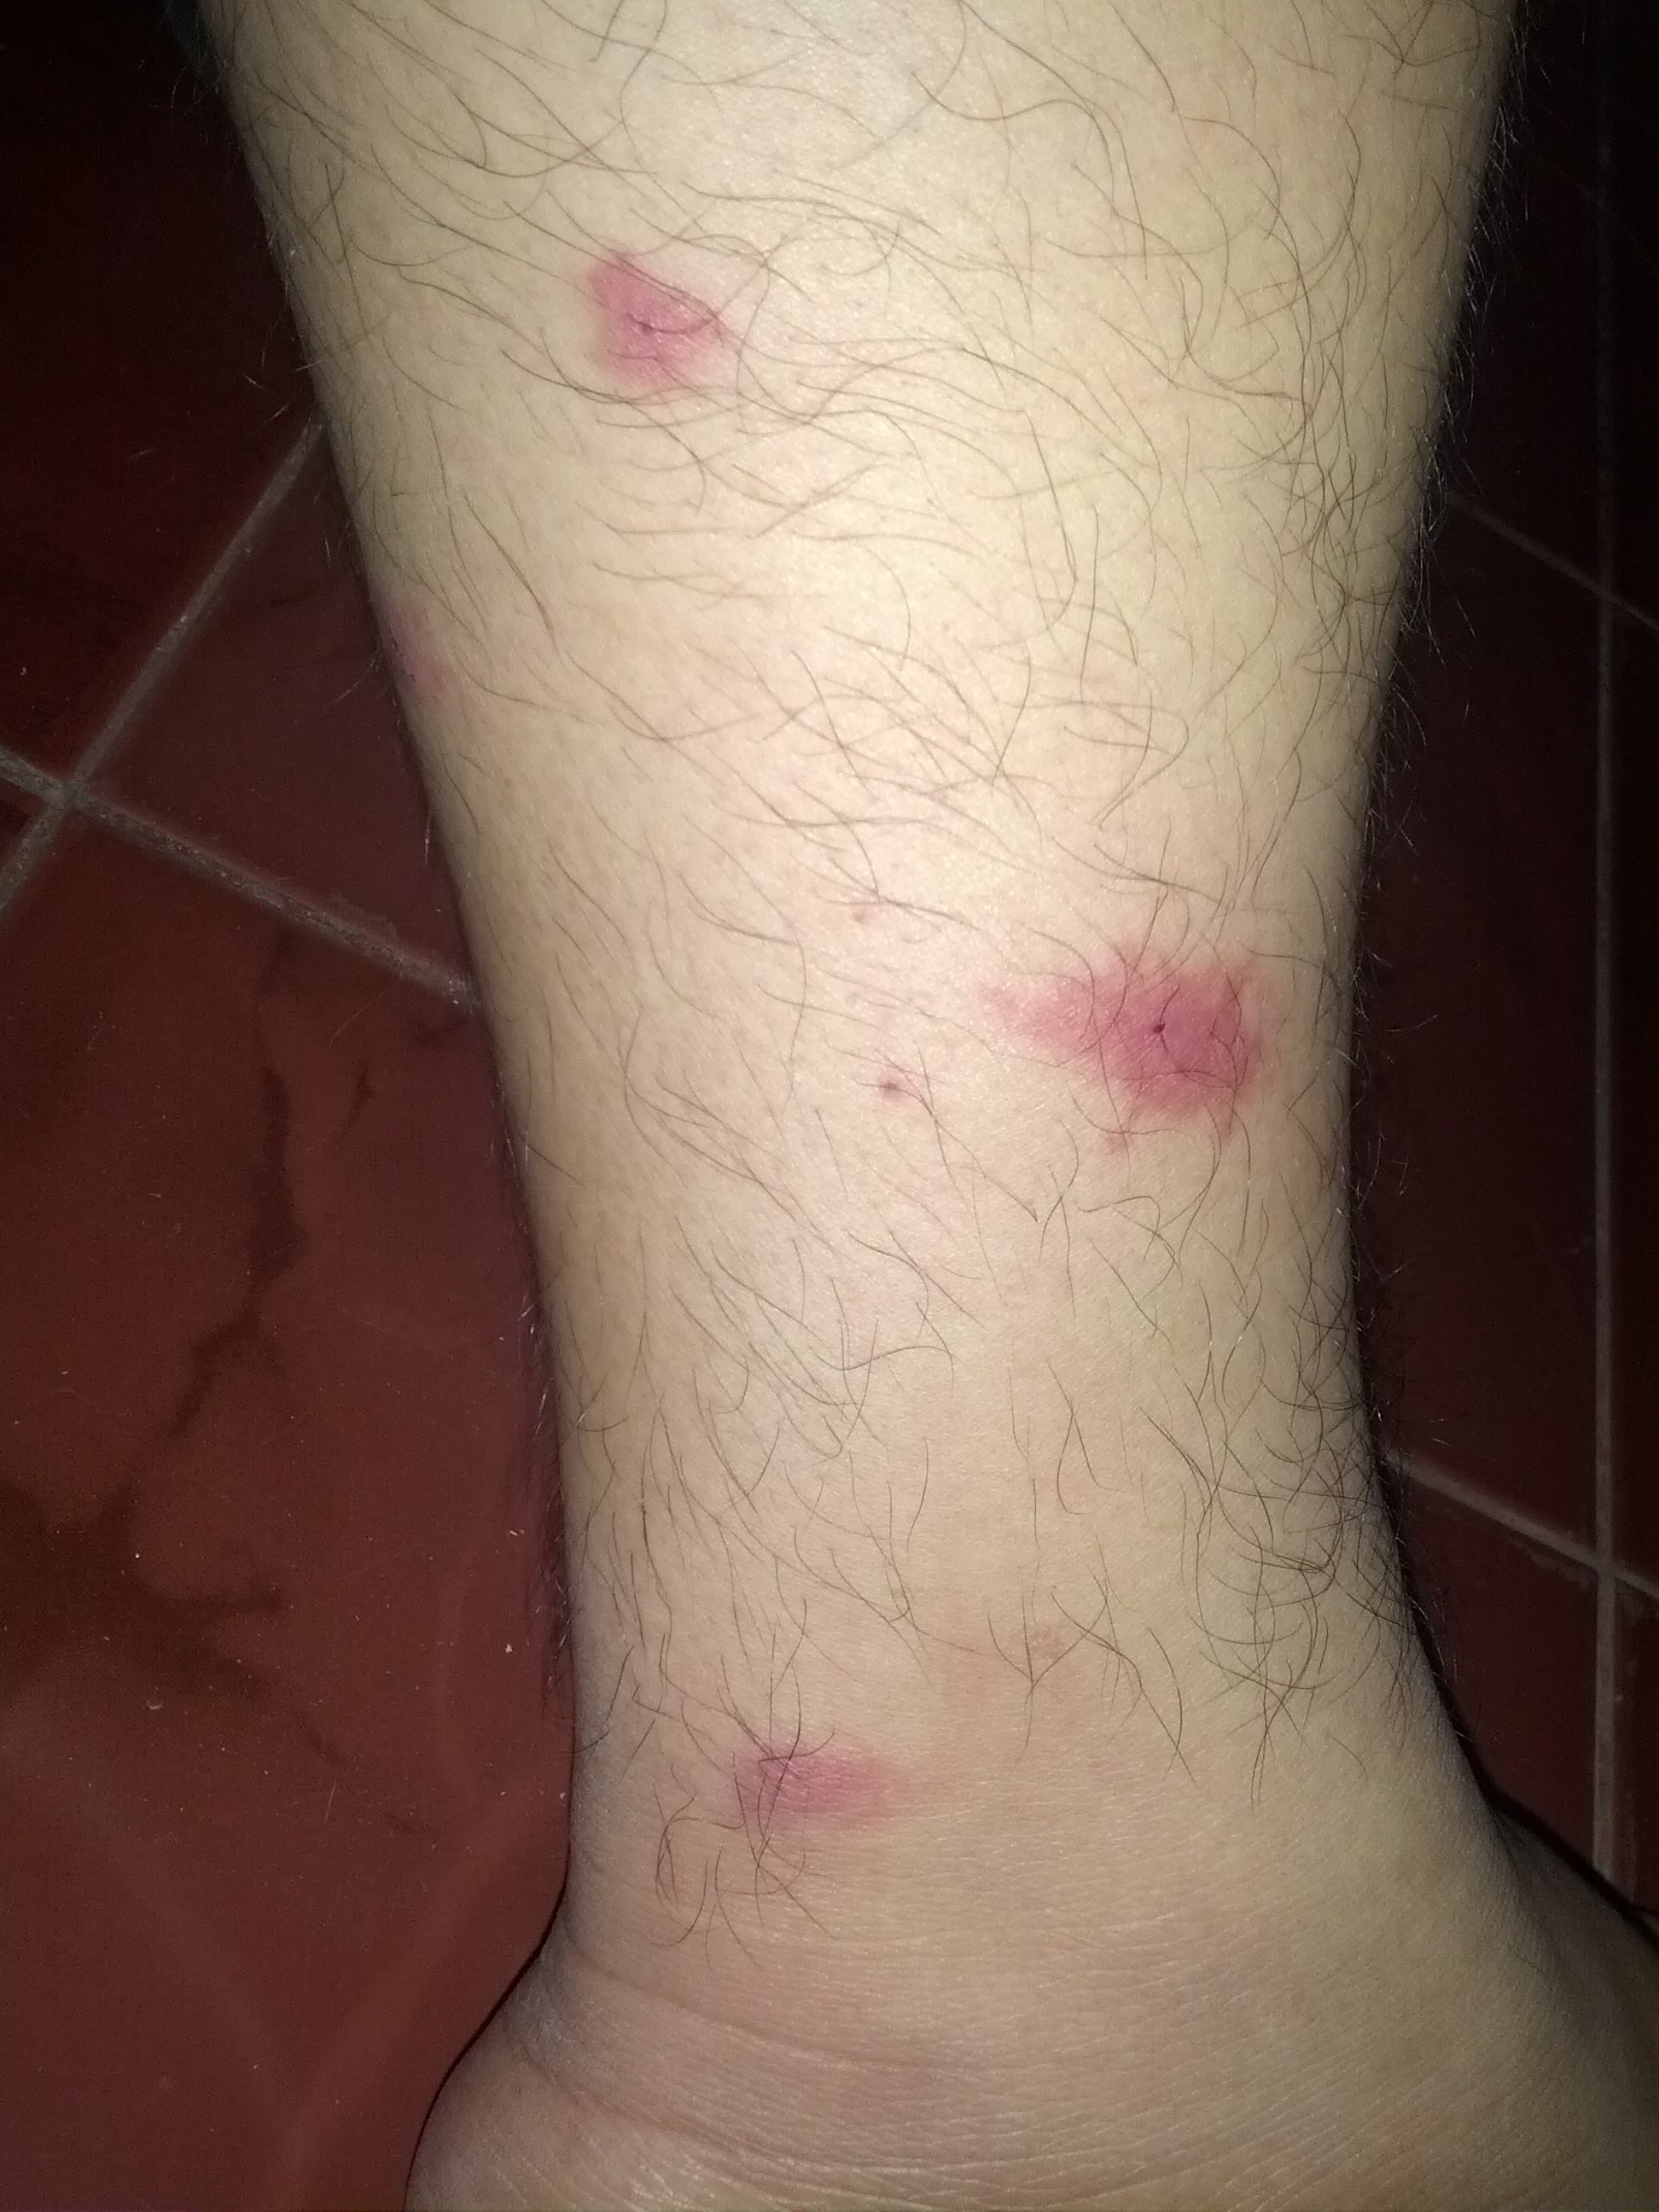 File:Mosquito bites leg.jpg - Wikimedia Commons